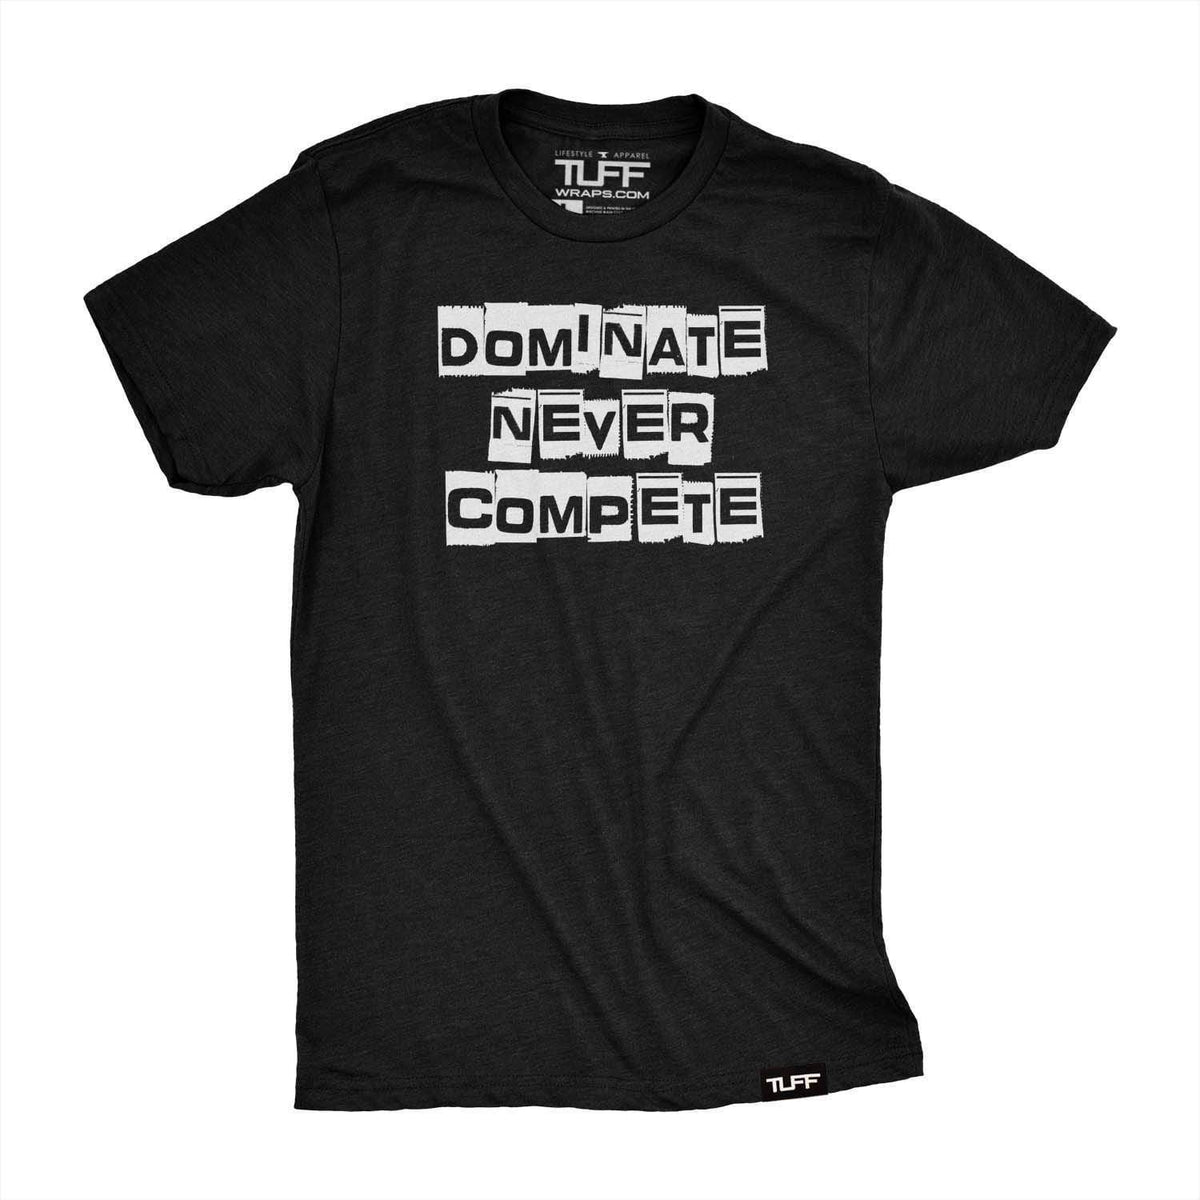 Dominate Never Compete Tee S / Black TuffWraps.com